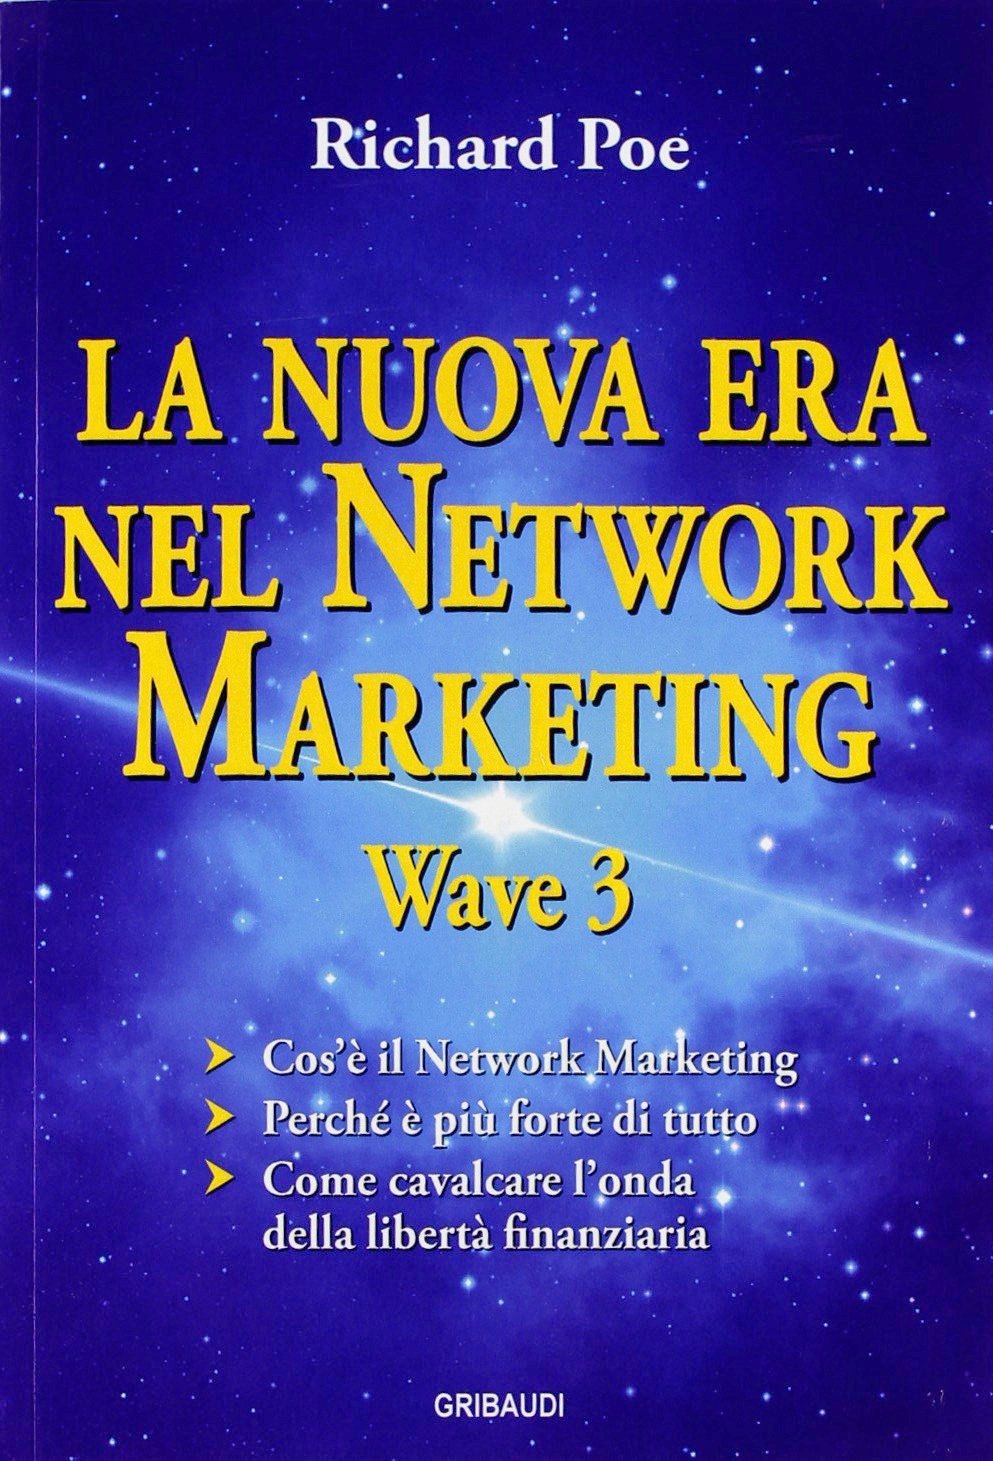 Richard Poe - La nuova era nel network marketing - Wave 3